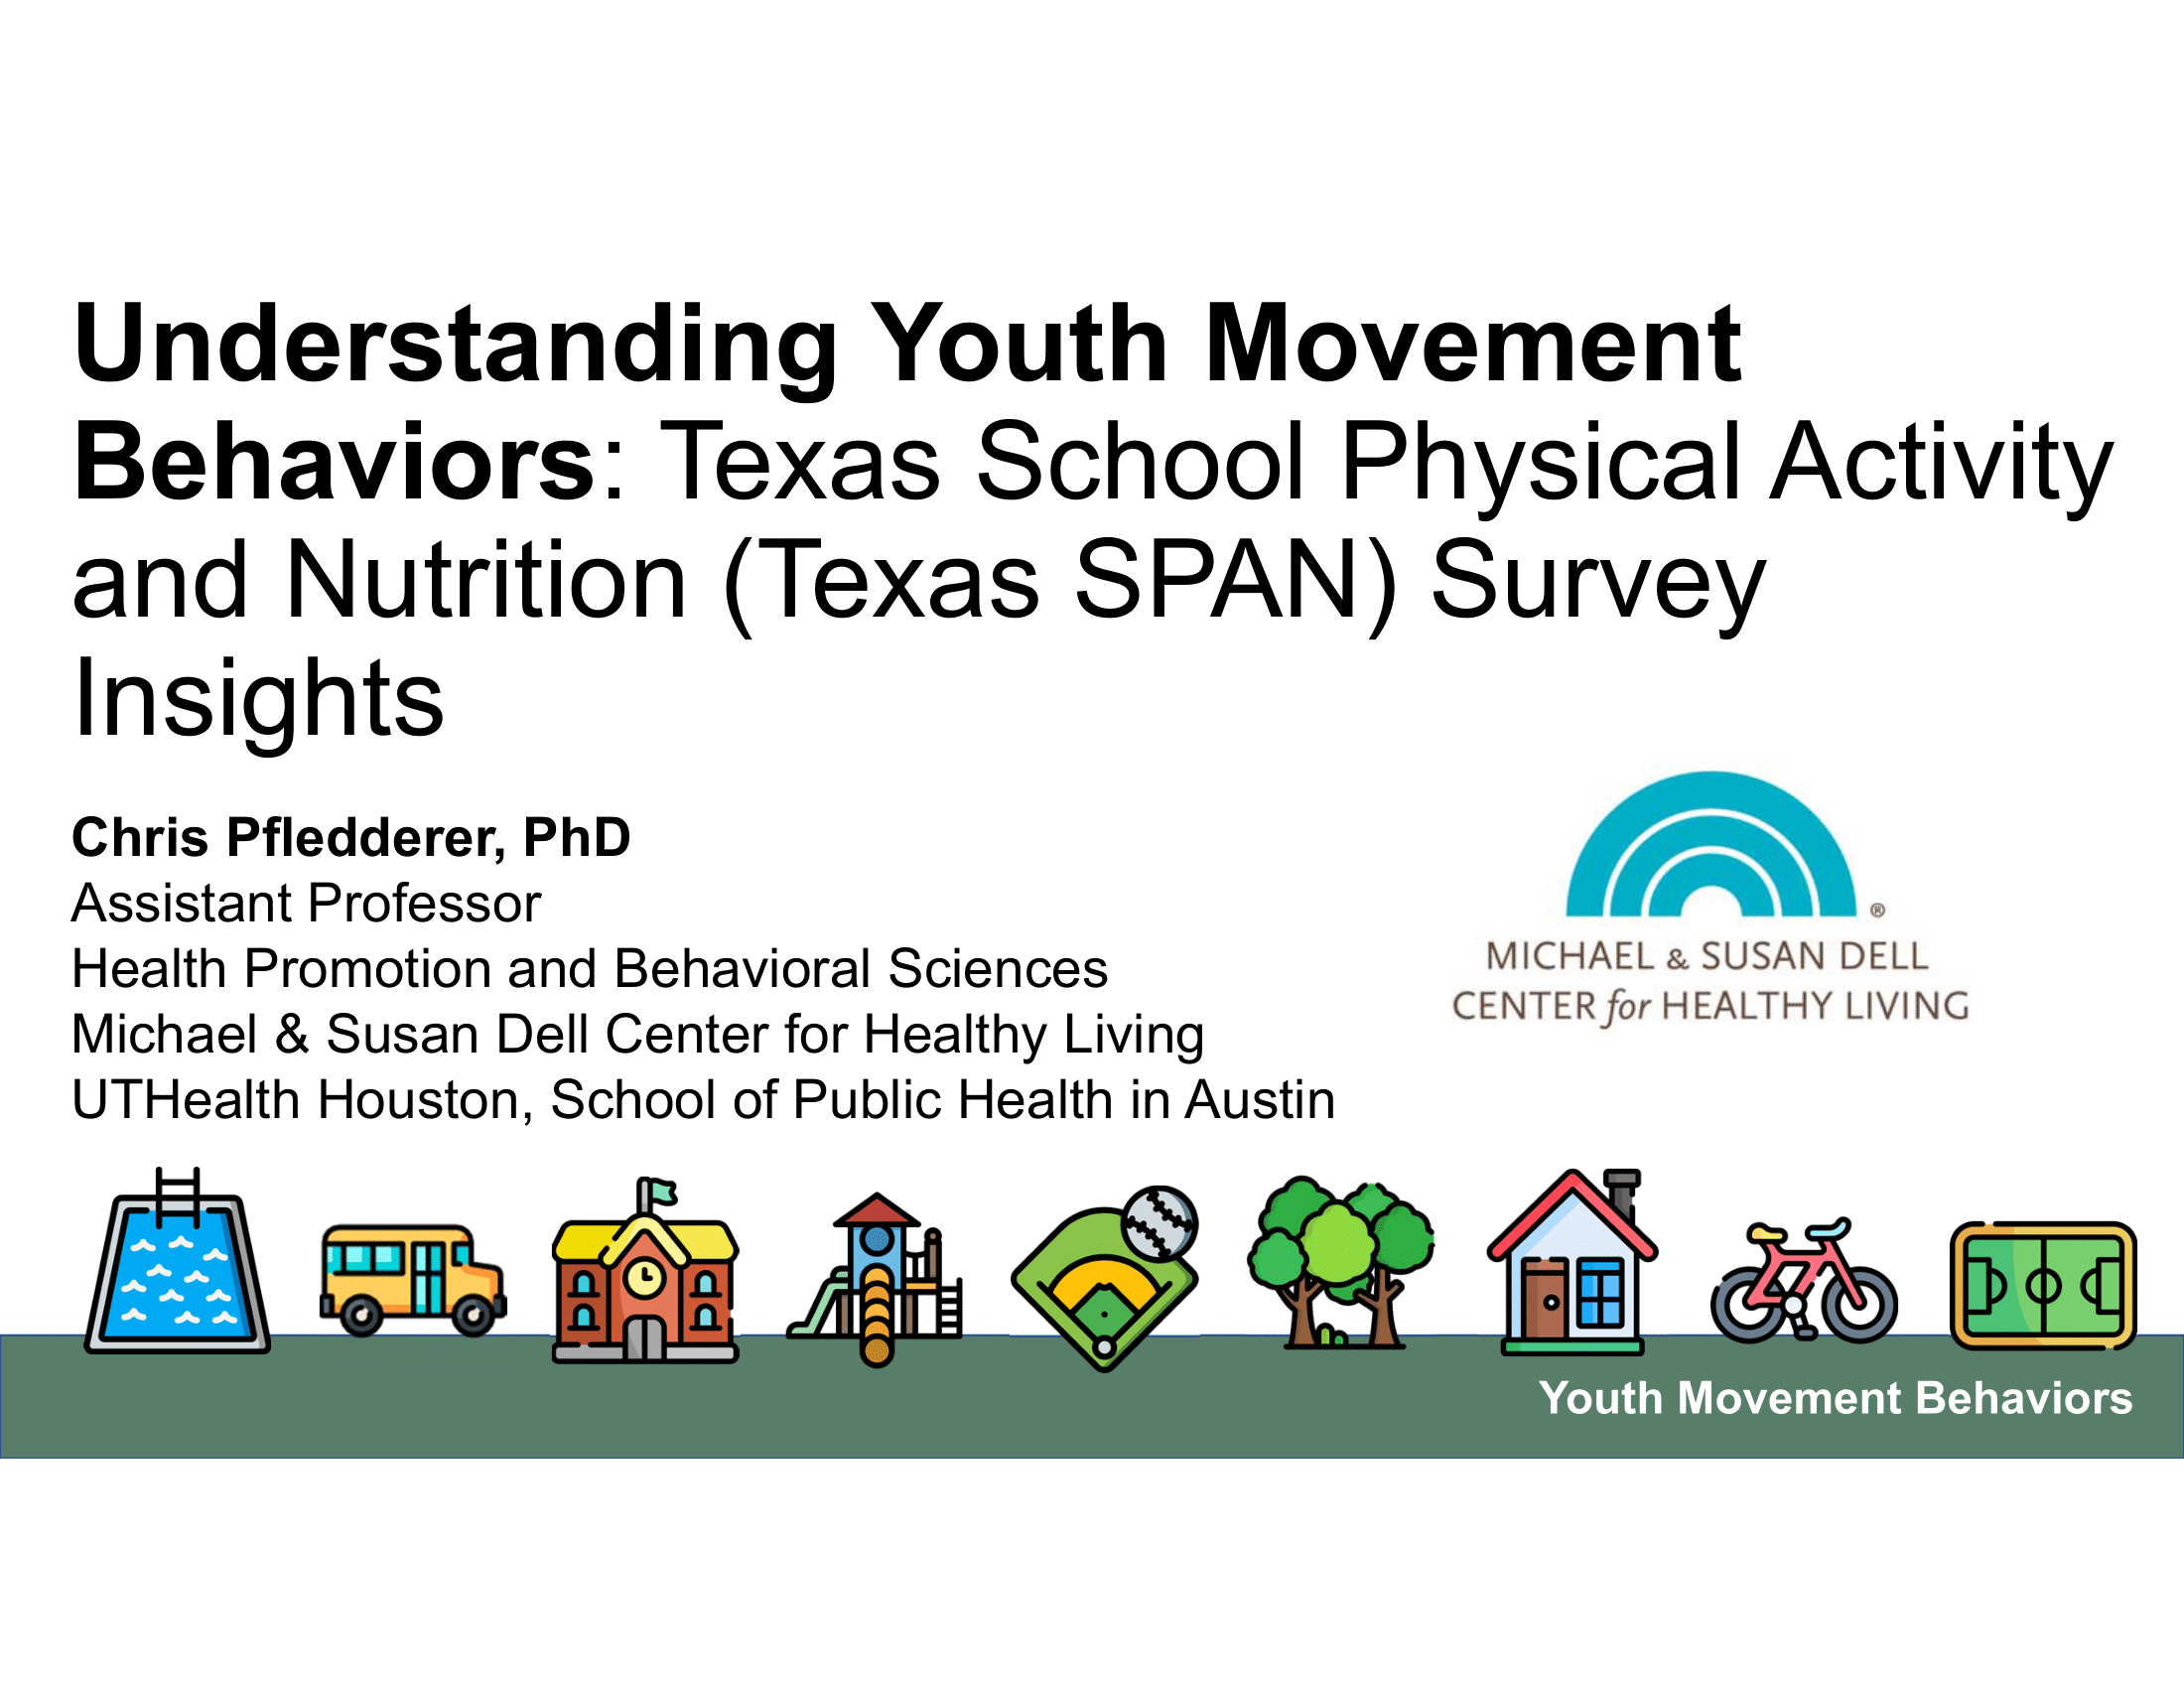 Thumbnail_Understanding Youth Movement Behaviors TX SPAN Survey Insights_03-26-24-1.png